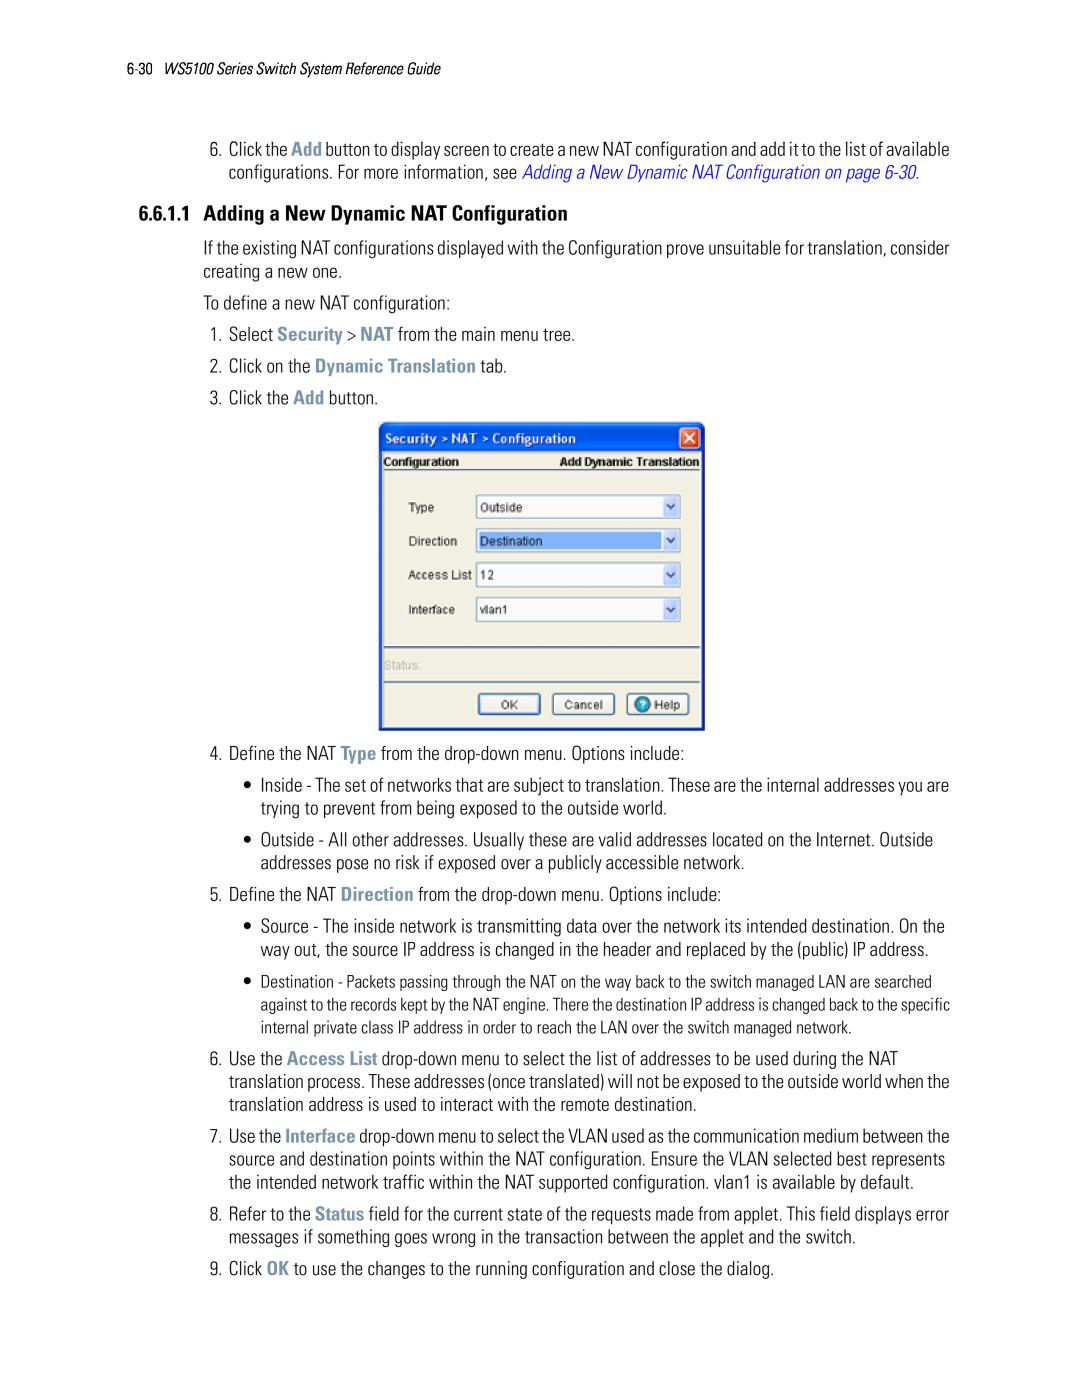 Motorola WS5100 manual 6.6.1.1Adding a New Dynamic NAT Configuration, Click on the Dynamic Translation tab 